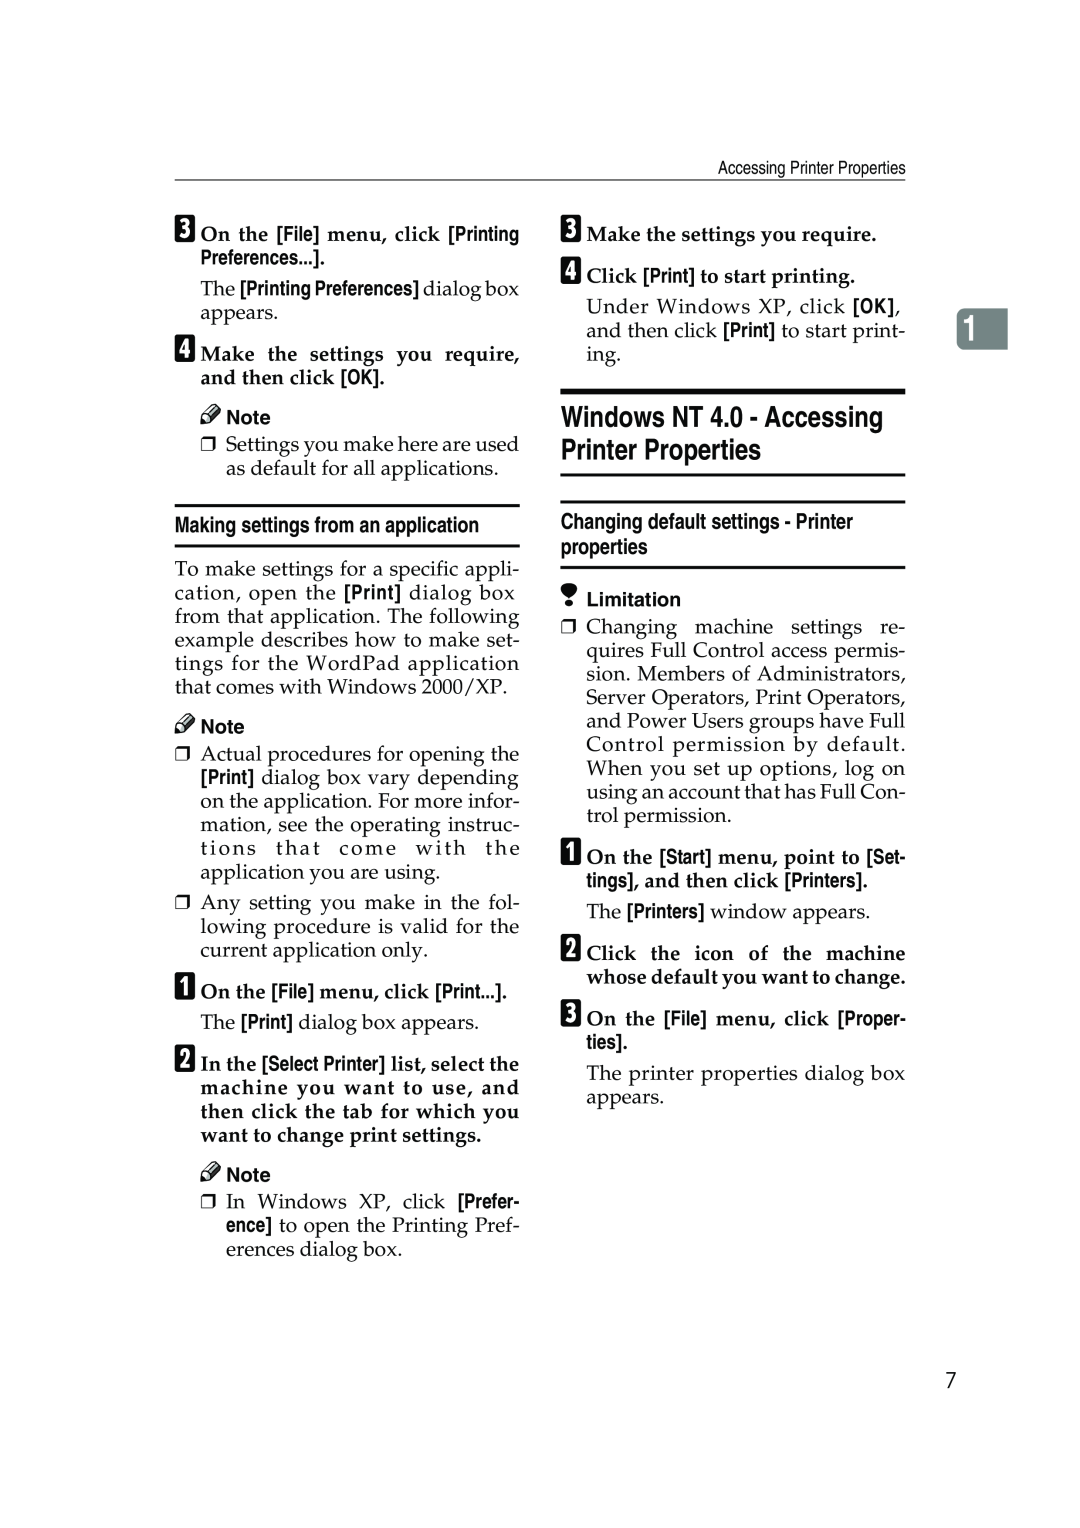 Xerox 2045e Windows NT 4.0 - Accessing Printer Properties, C On the File menu, click Printing Preferences, Limitation 